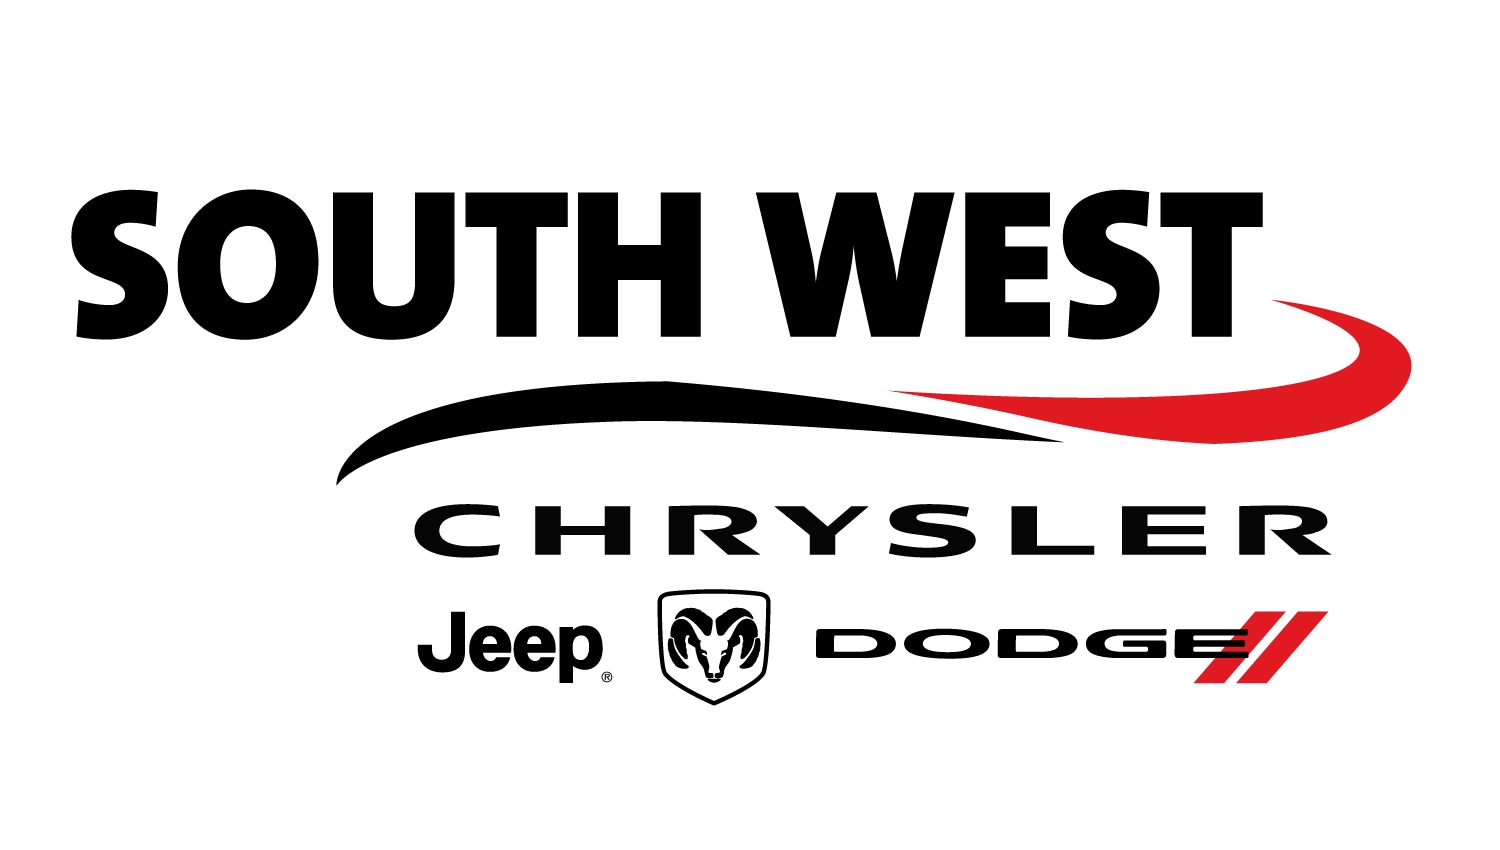 Southwest dodge chrysler jeep #2